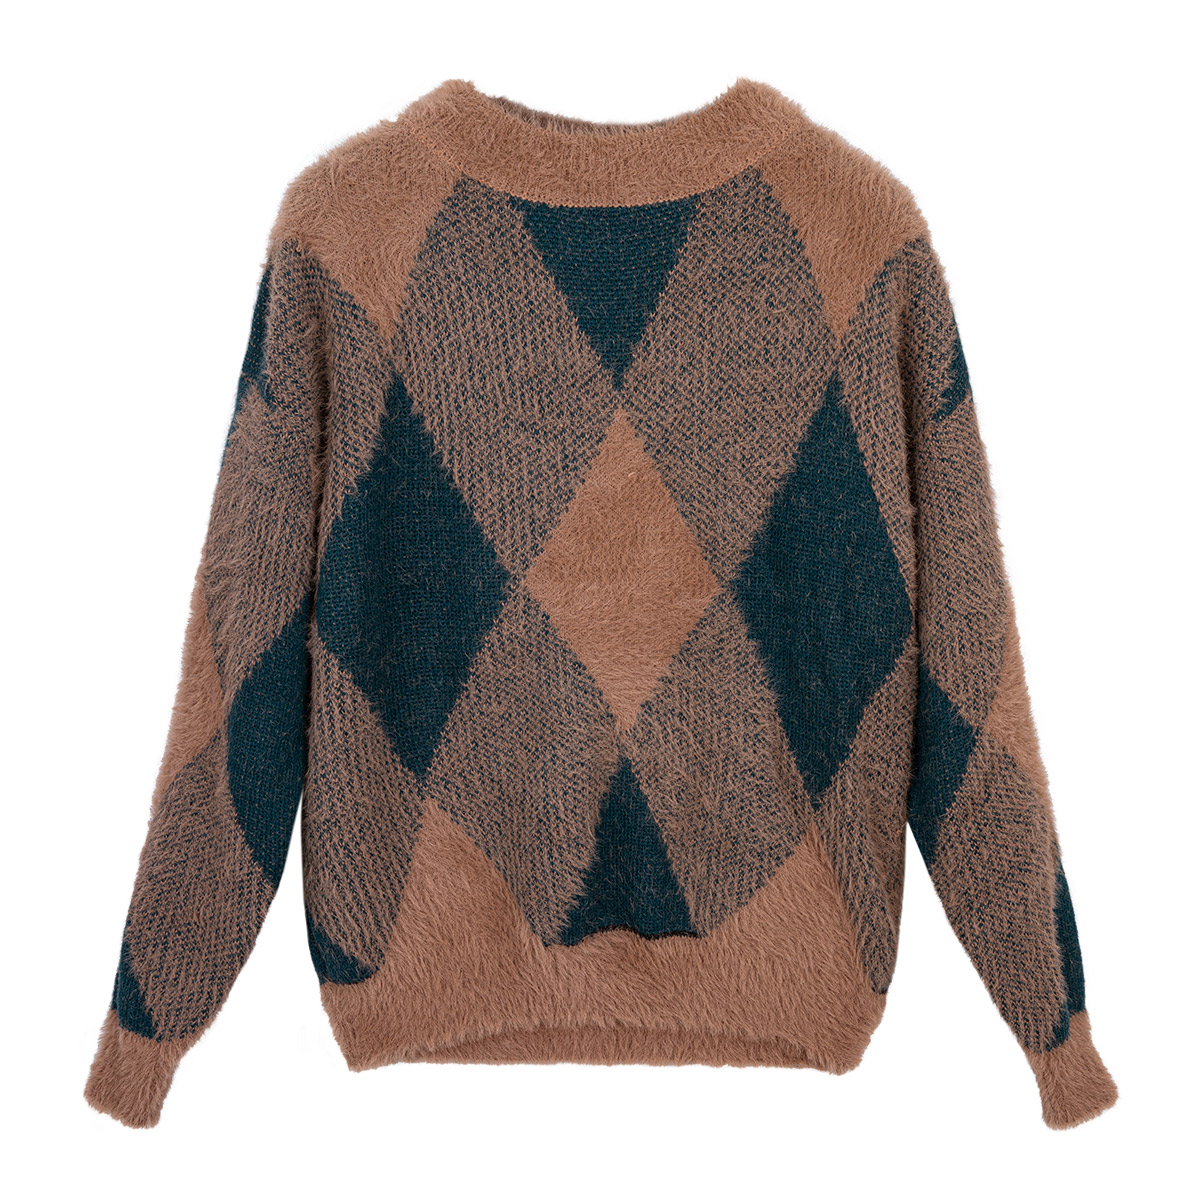 Soft checkered sweater